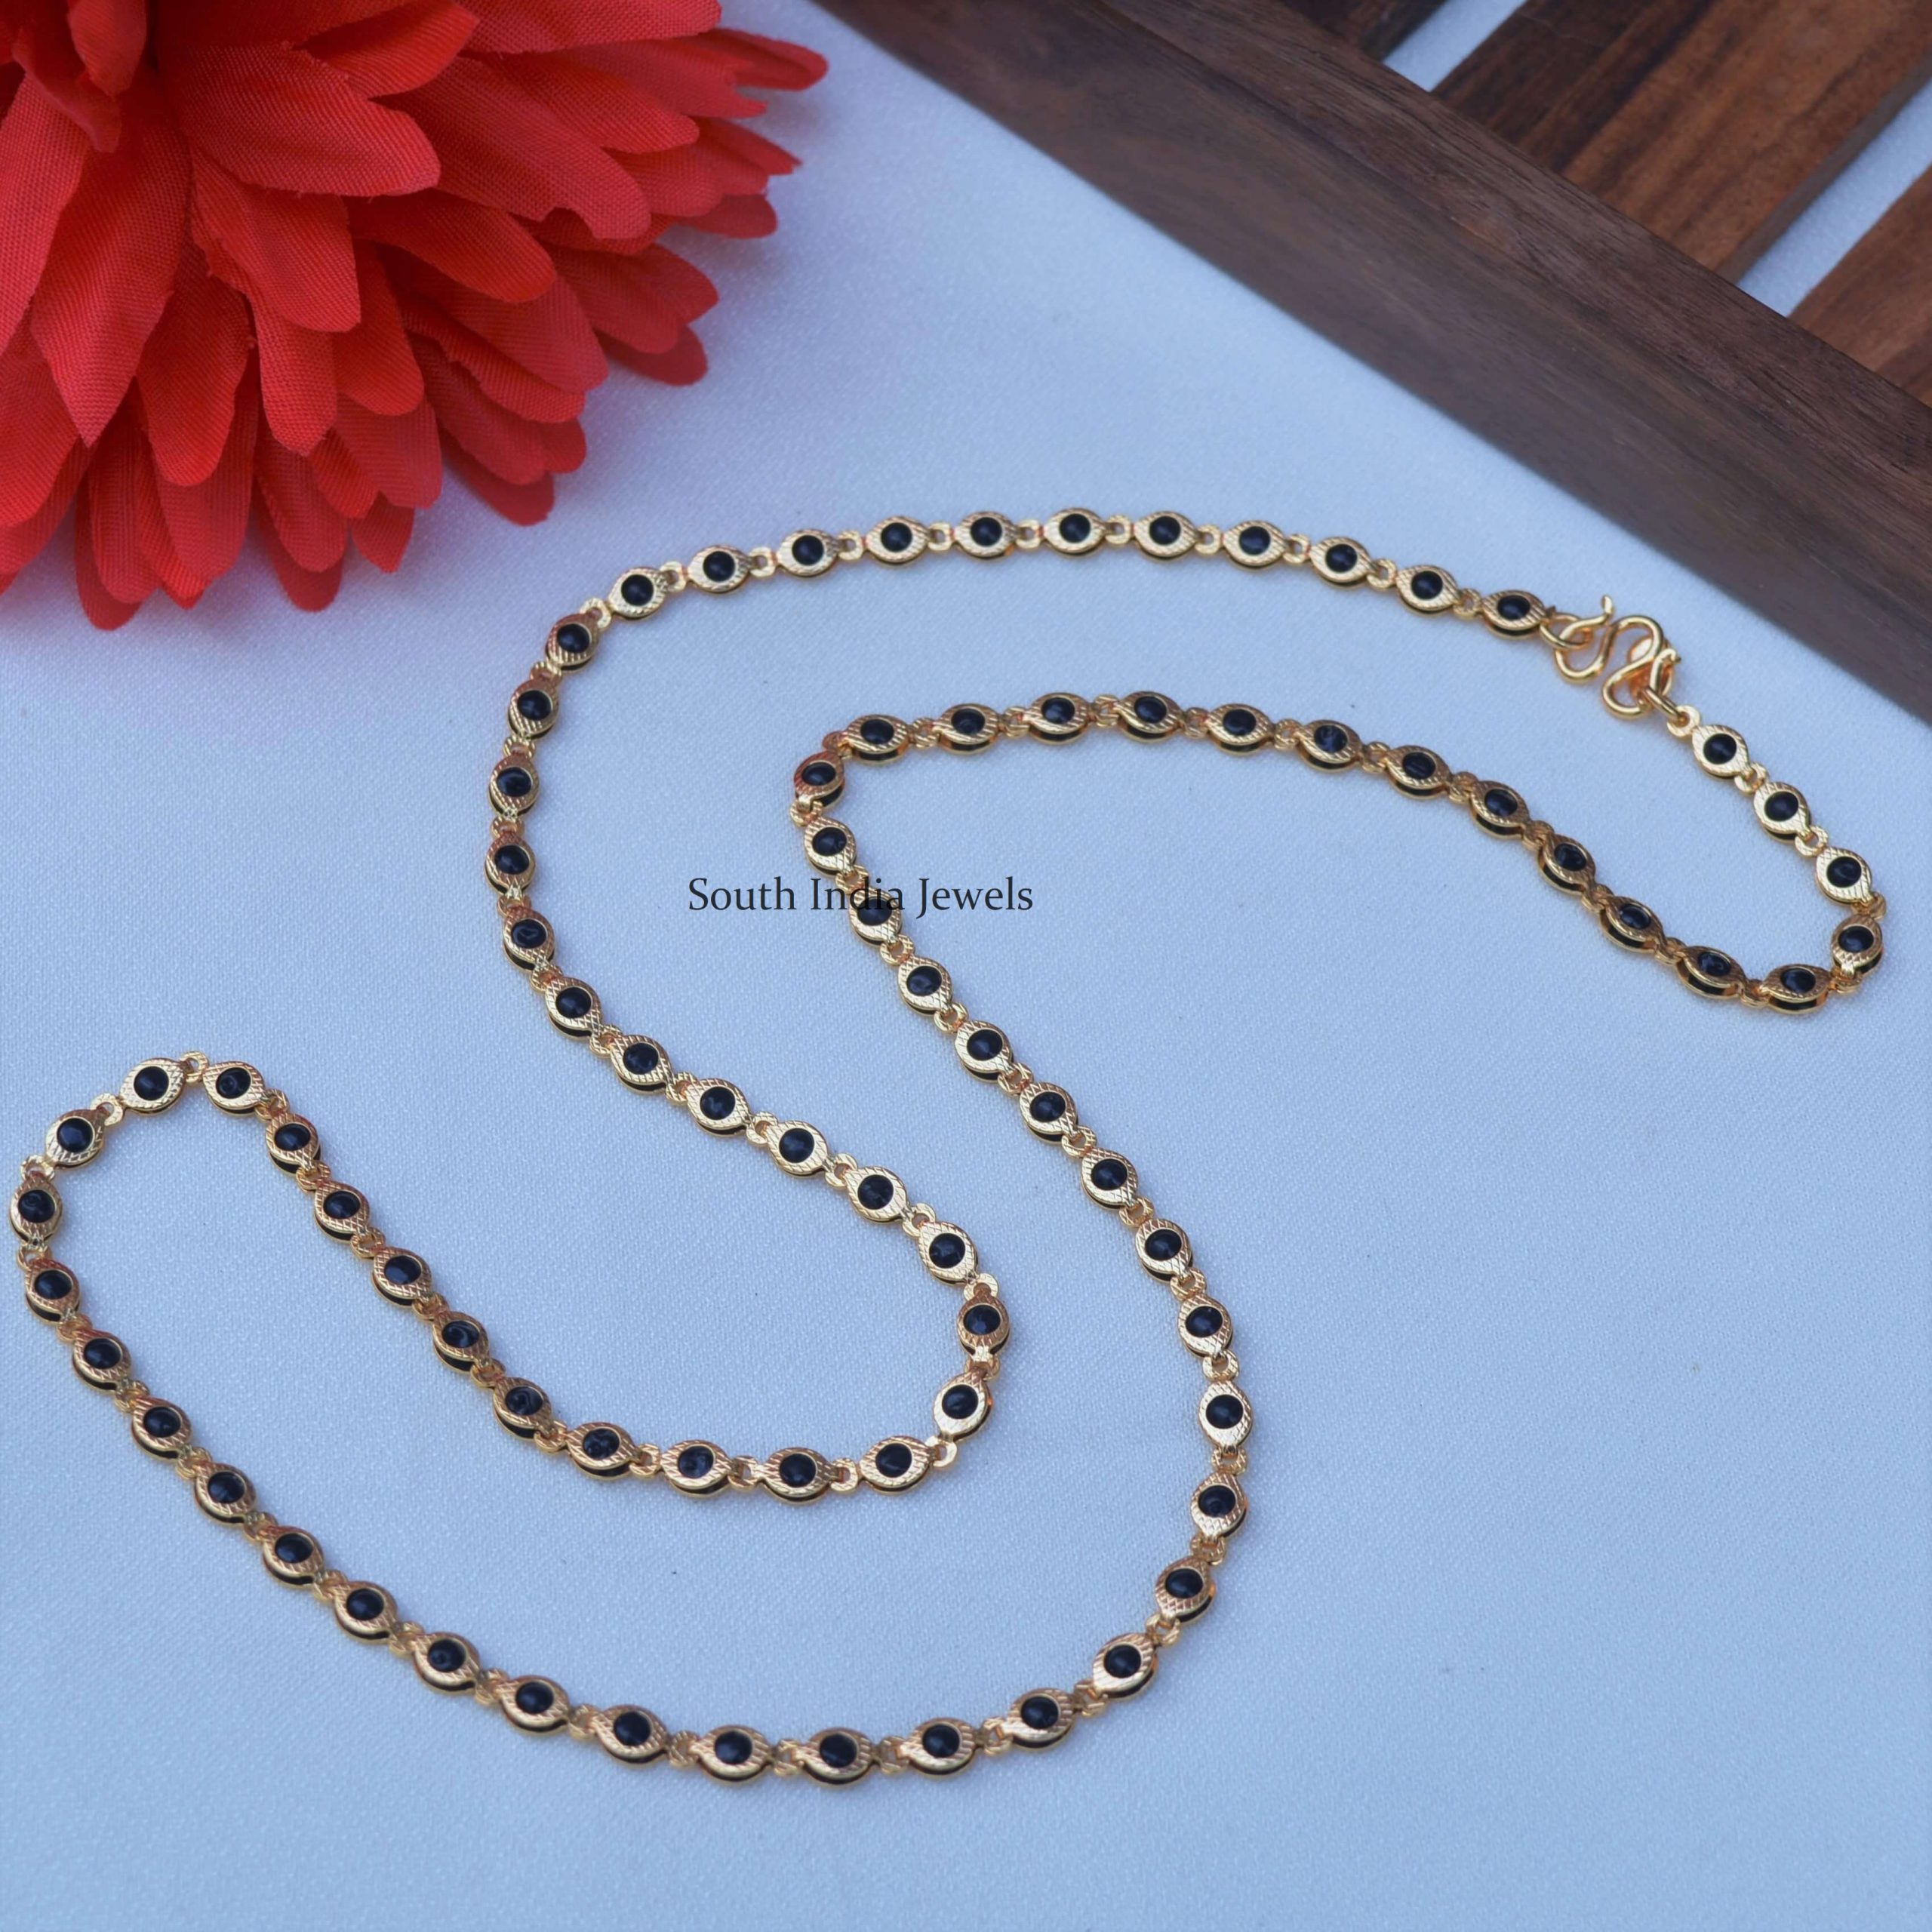 Attractive Black Beads Chain